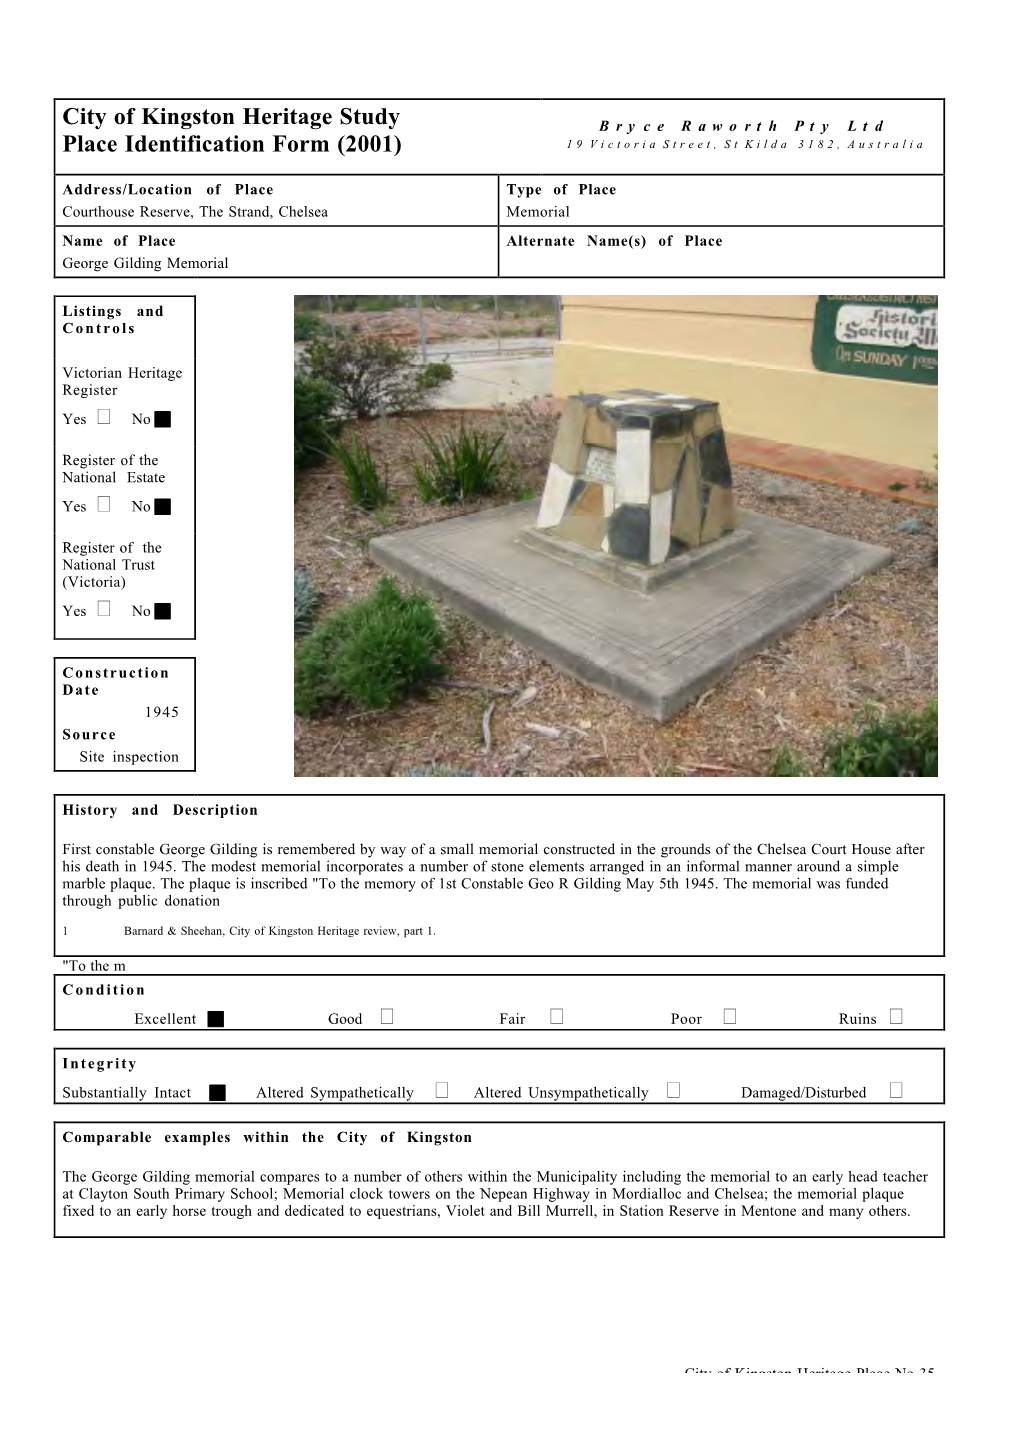 City of Kingston Heritage Study Place Identification Form (2001)